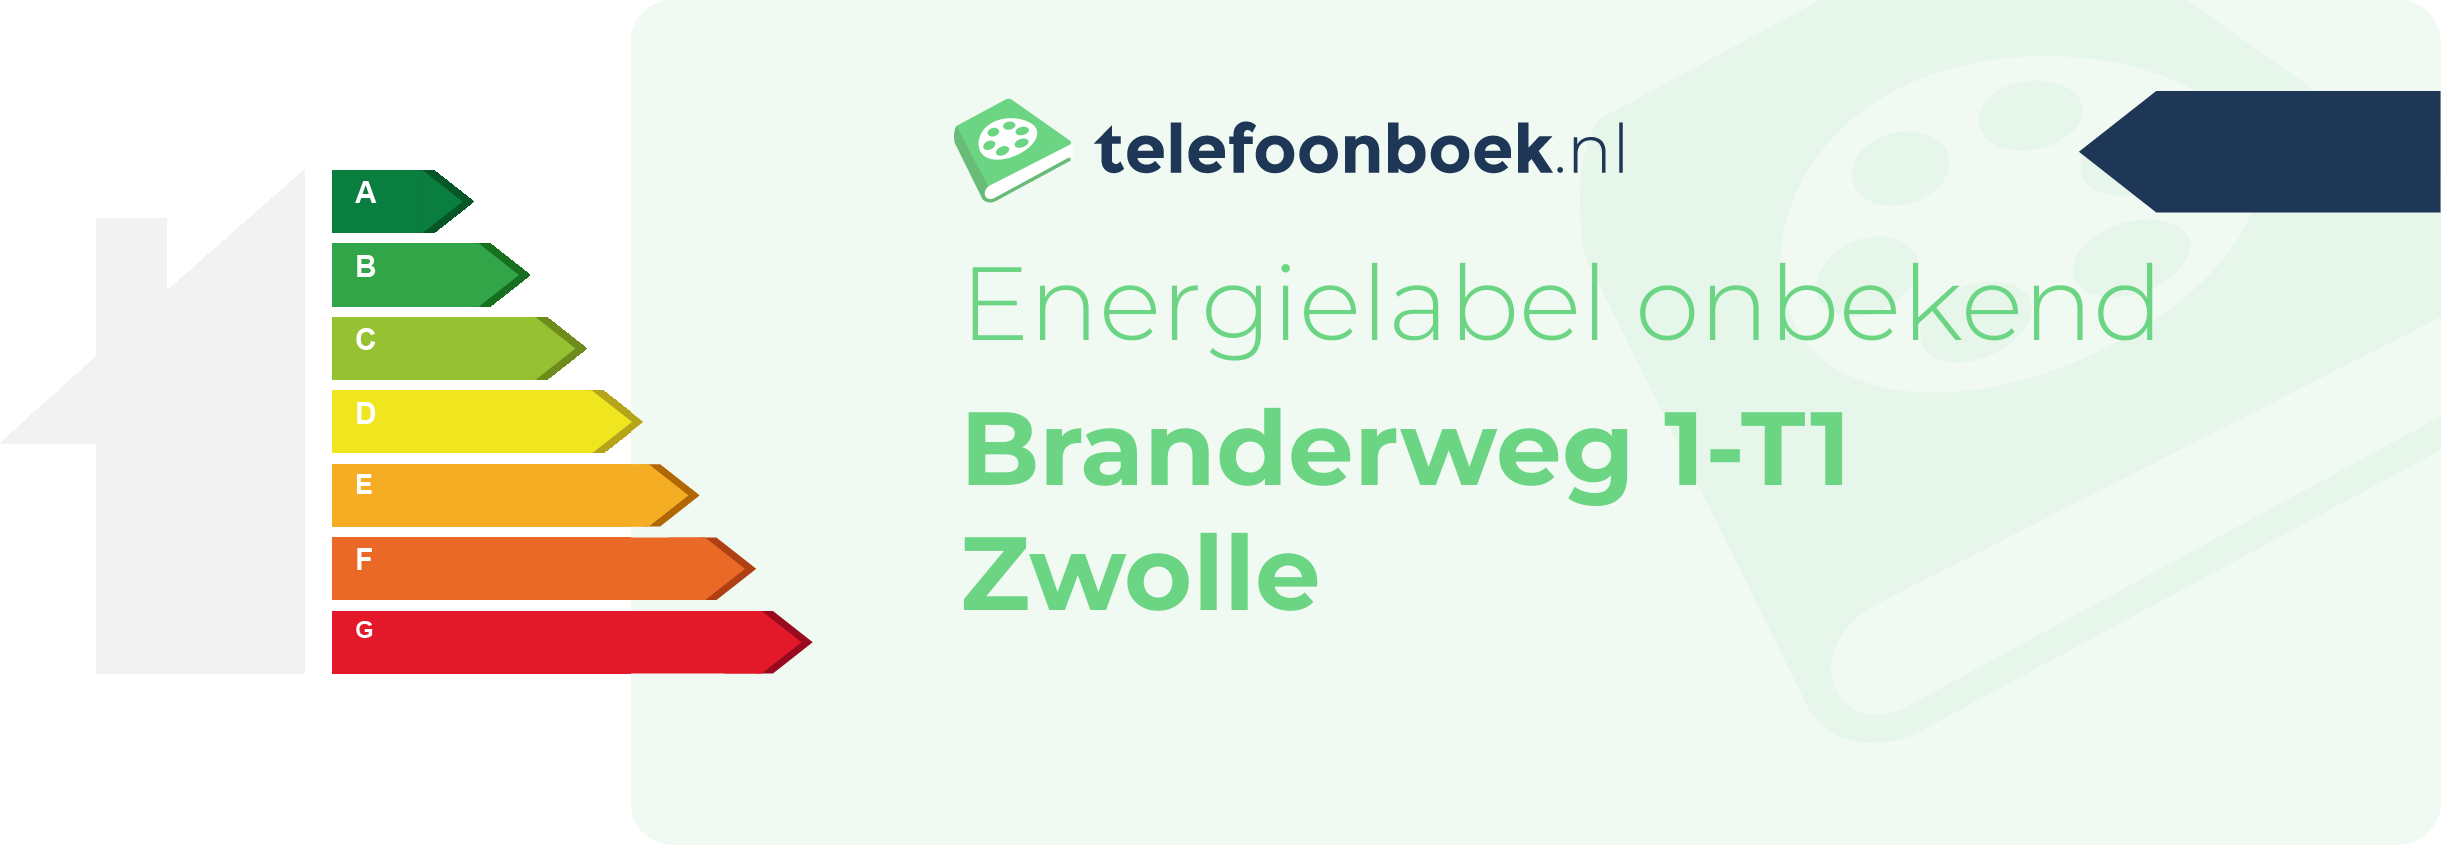 Energielabel Branderweg 1-T1 Zwolle